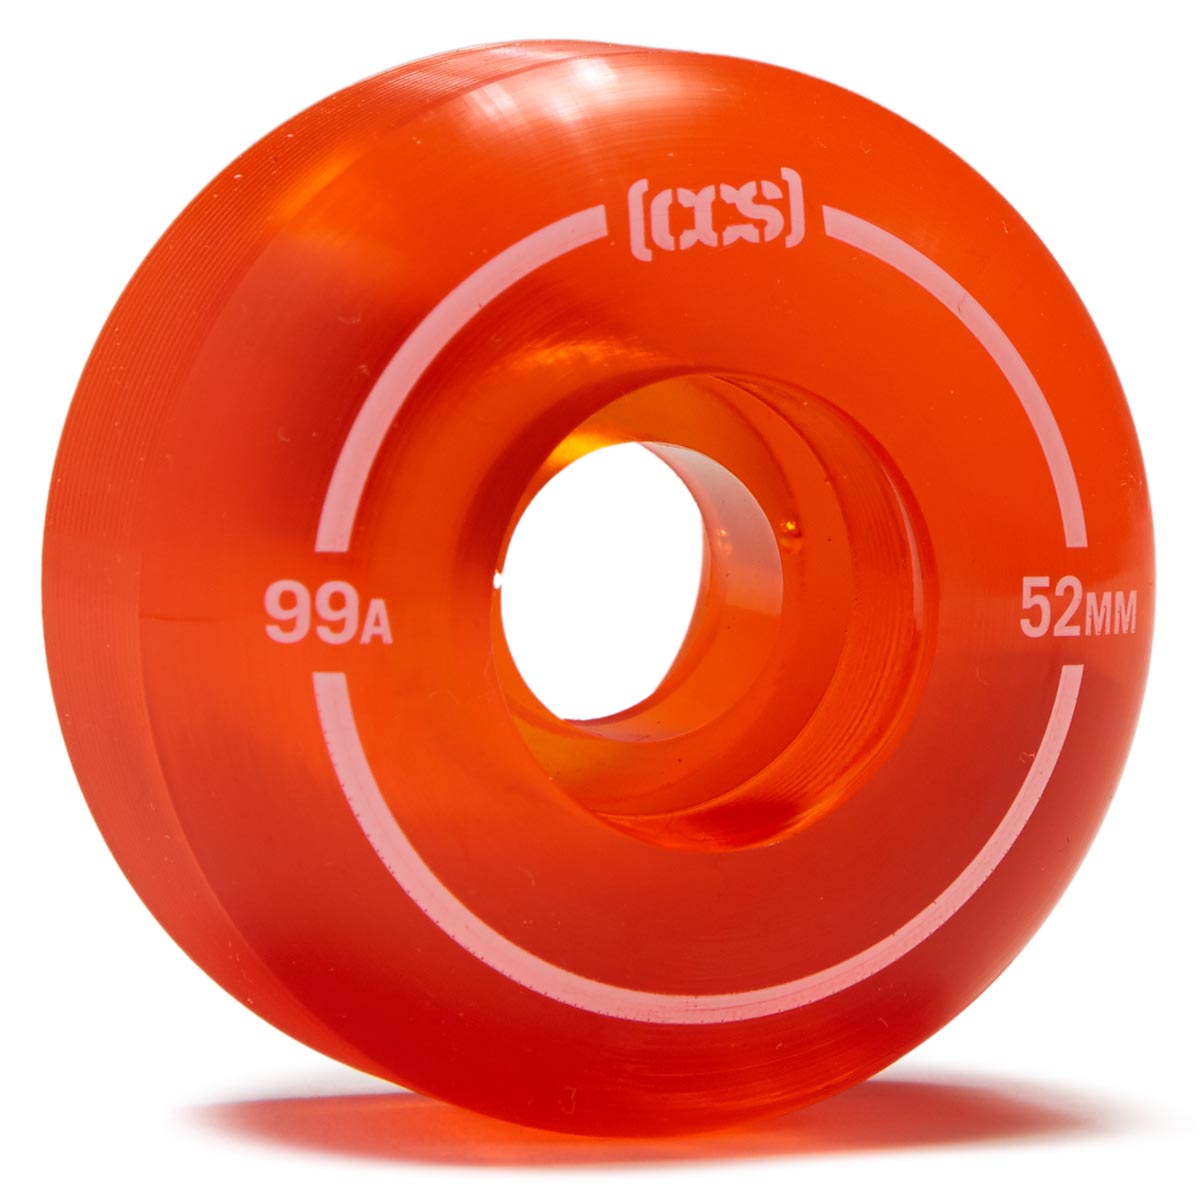 CCS Clear 99a Skateboard Wheels - Orange - 52mm image 1